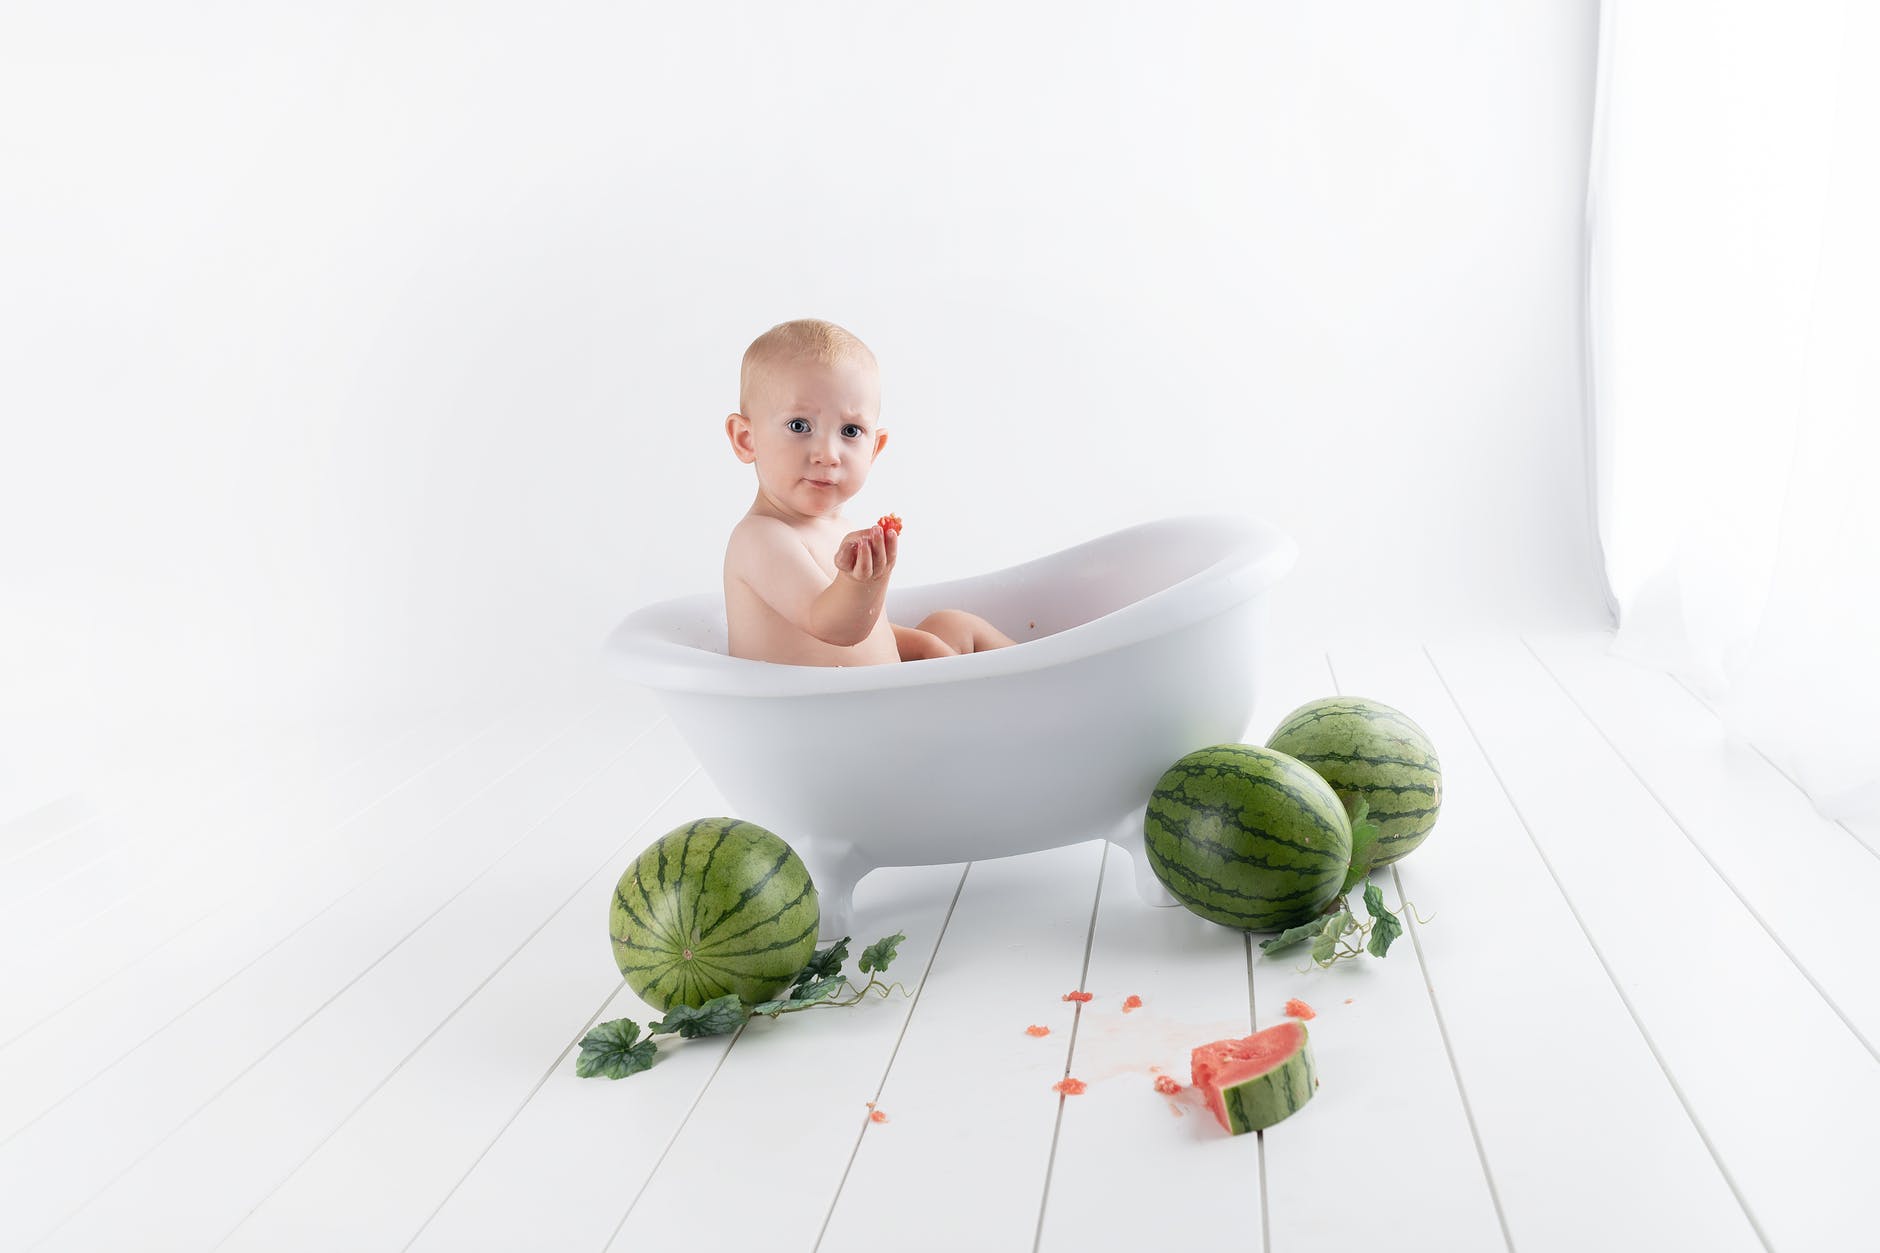 Baby Food Market is Set to Experience Innovative Growth by 2027 | Danone S.A., FrieslandCampina DOMO, Hain Celestial Group, Hero Group, Mead Johnson & Company, Nestle S.A., Perrigo Company